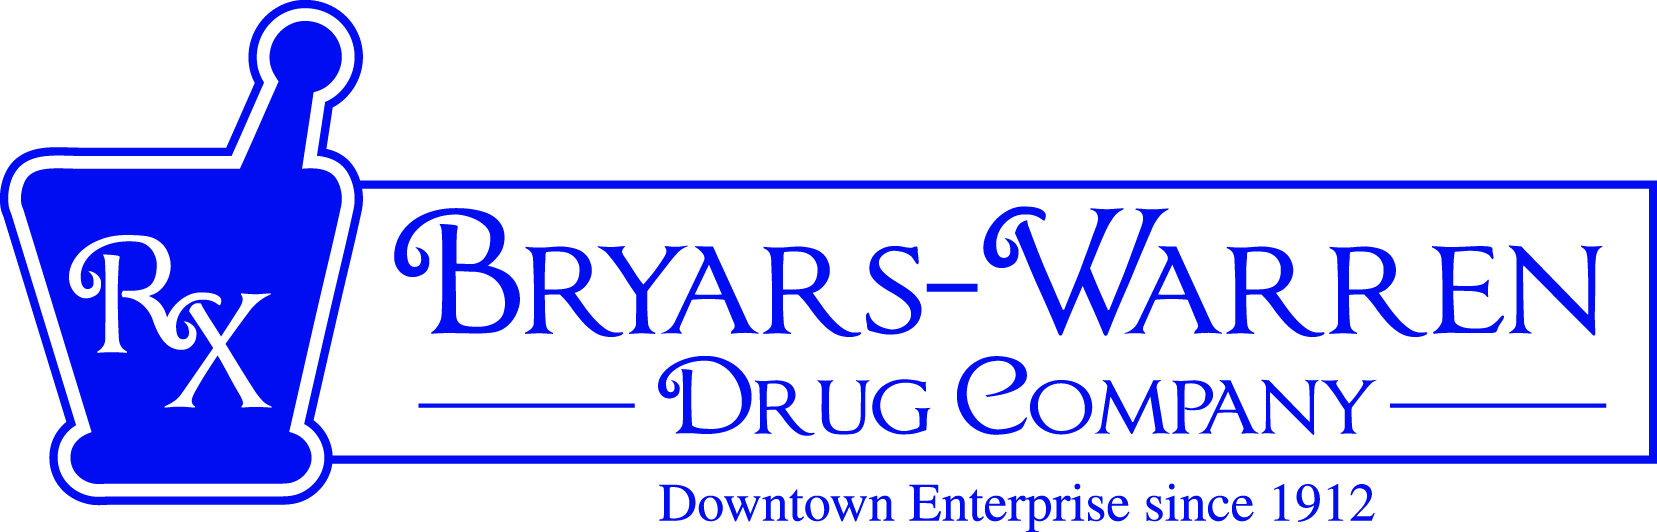 Bryars-Warren Drug Co